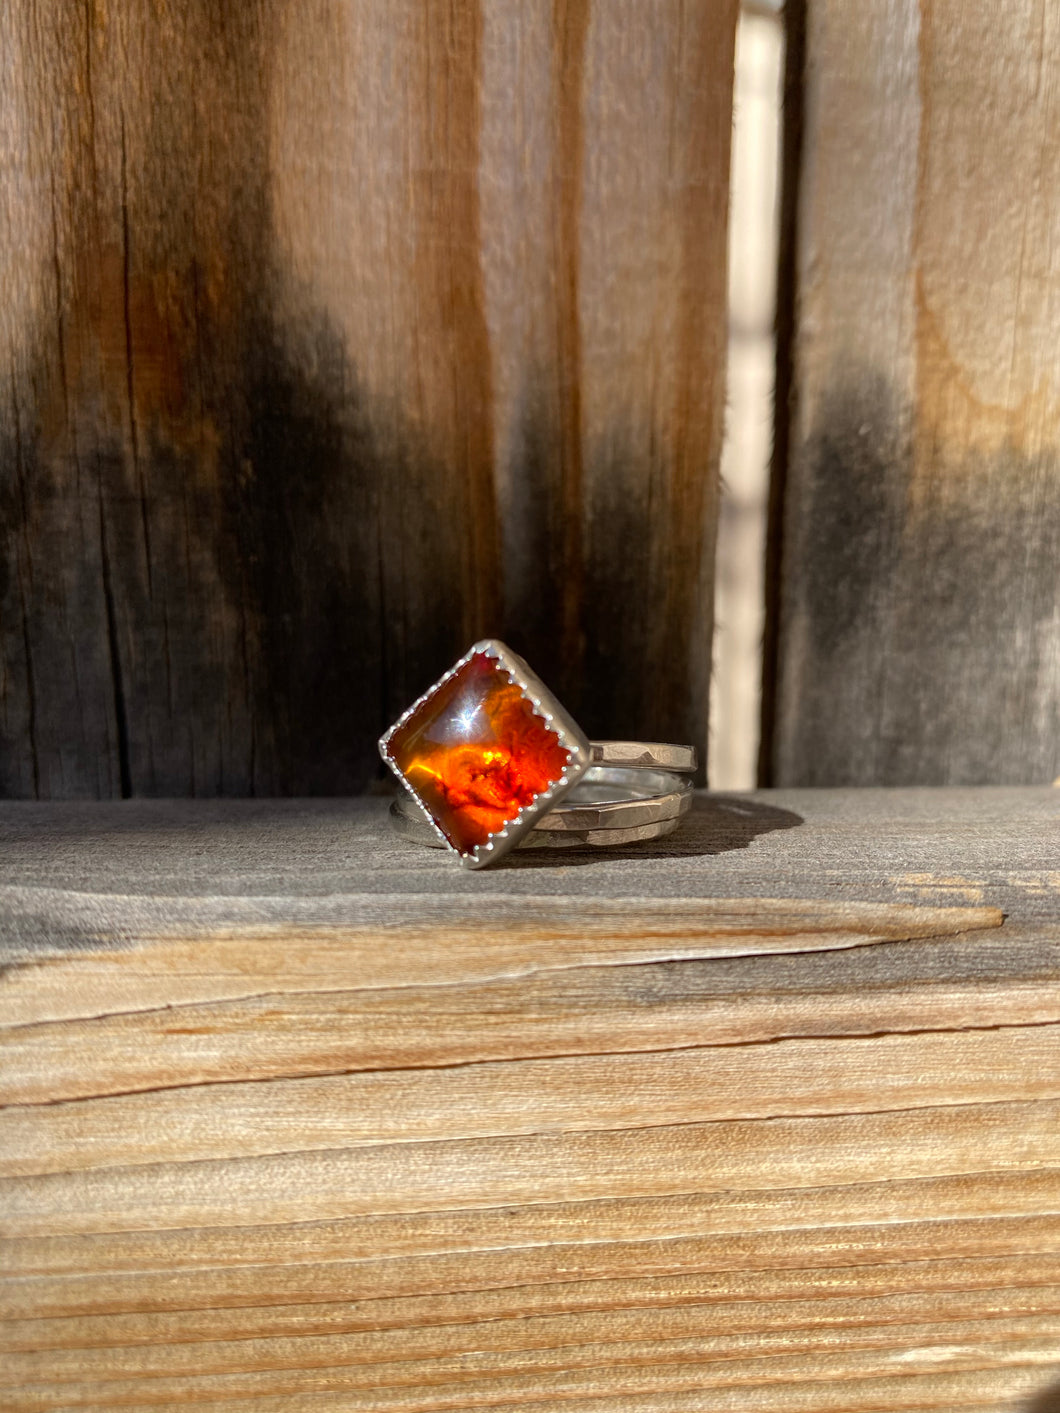 Baltic amber stacker ring set - size 9